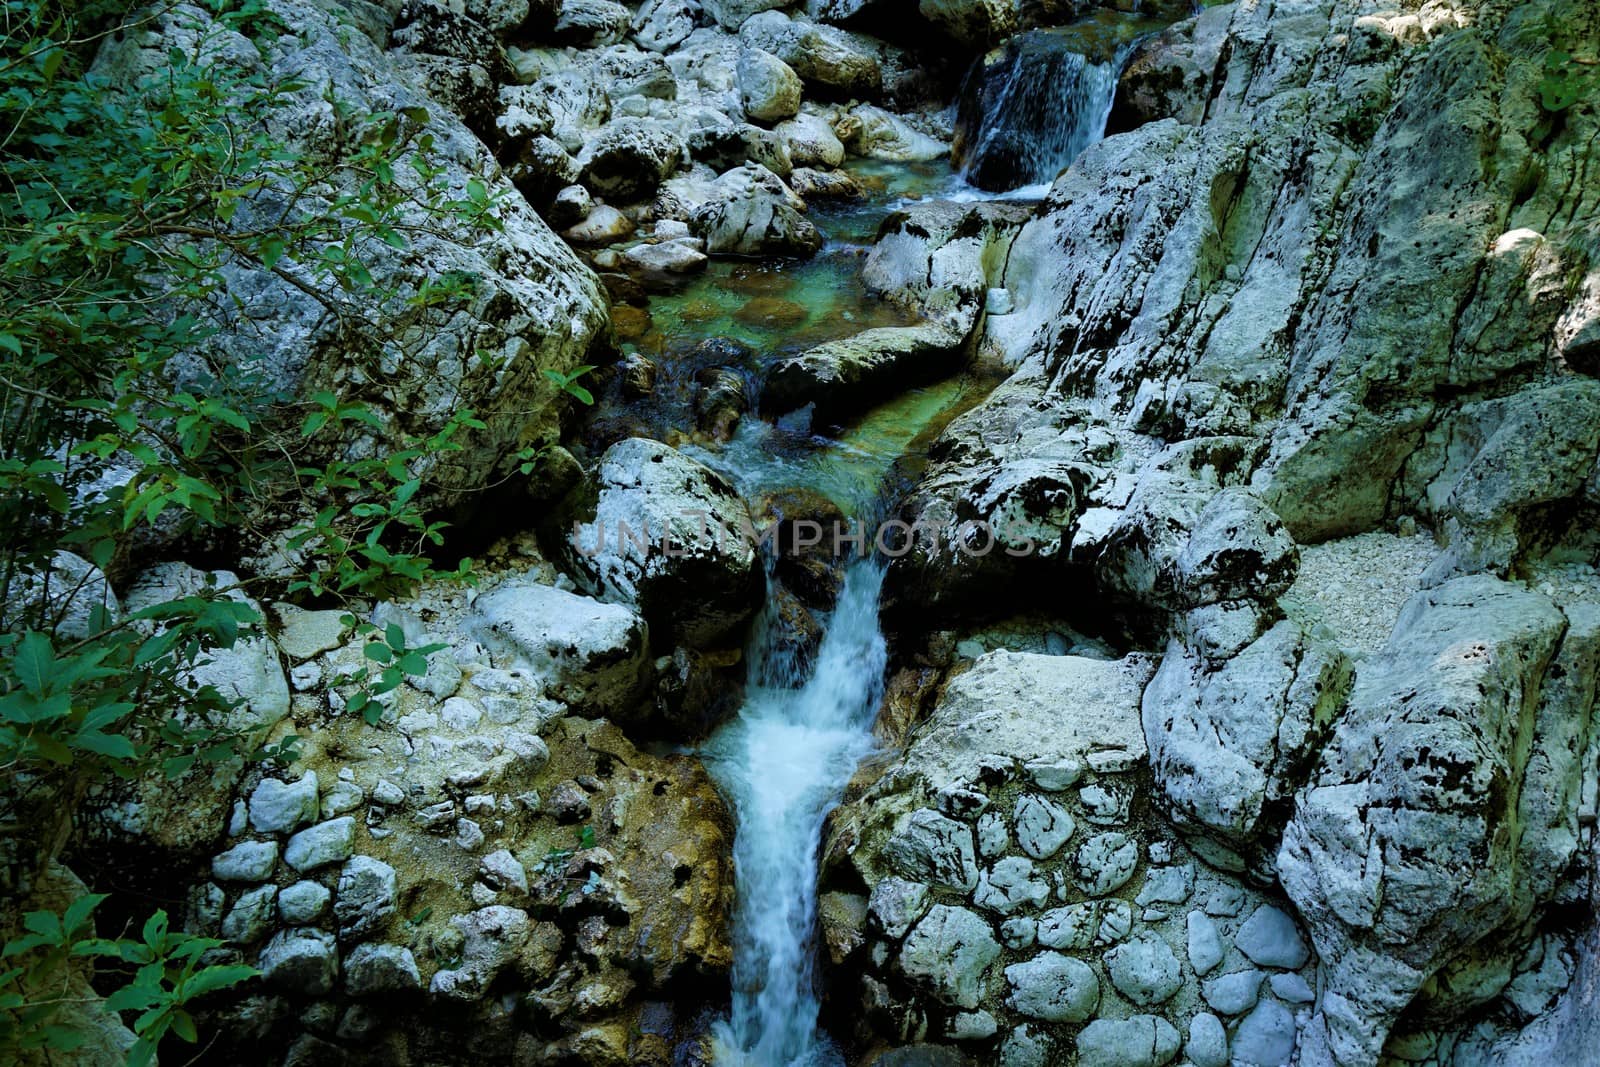 Savica near the Savica falls in Slovenia